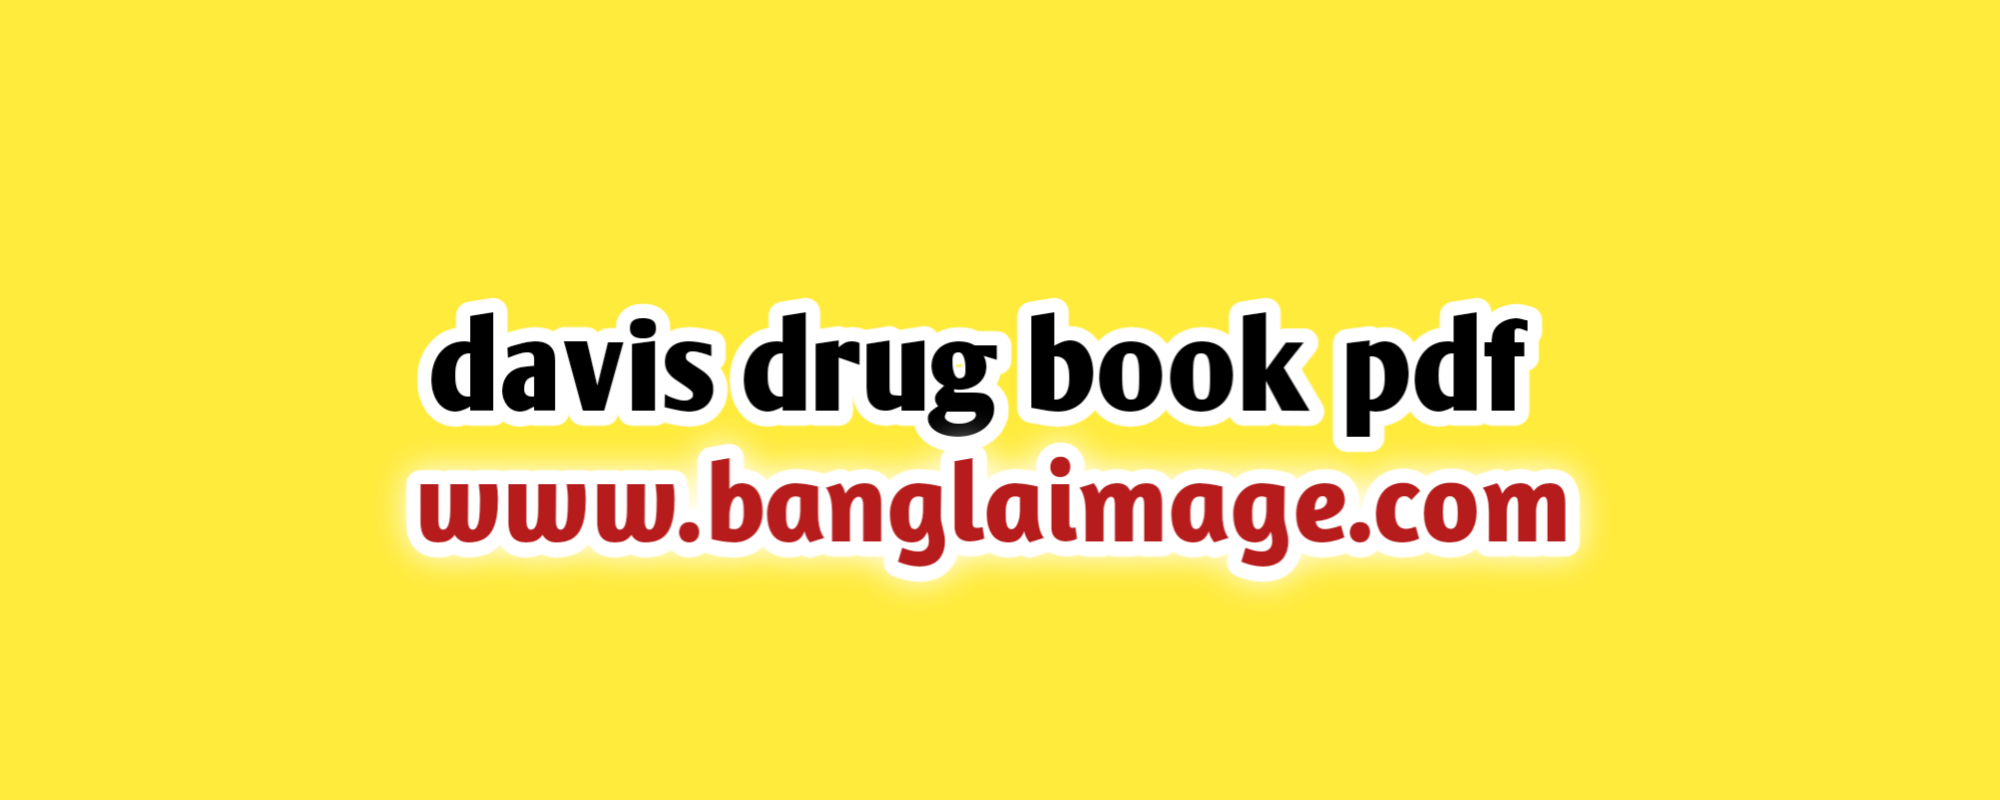 davis drug book pdf, davis drug book pdf drive file updated, davis drug book pdf free download, the davis drug book pdf drive file updated